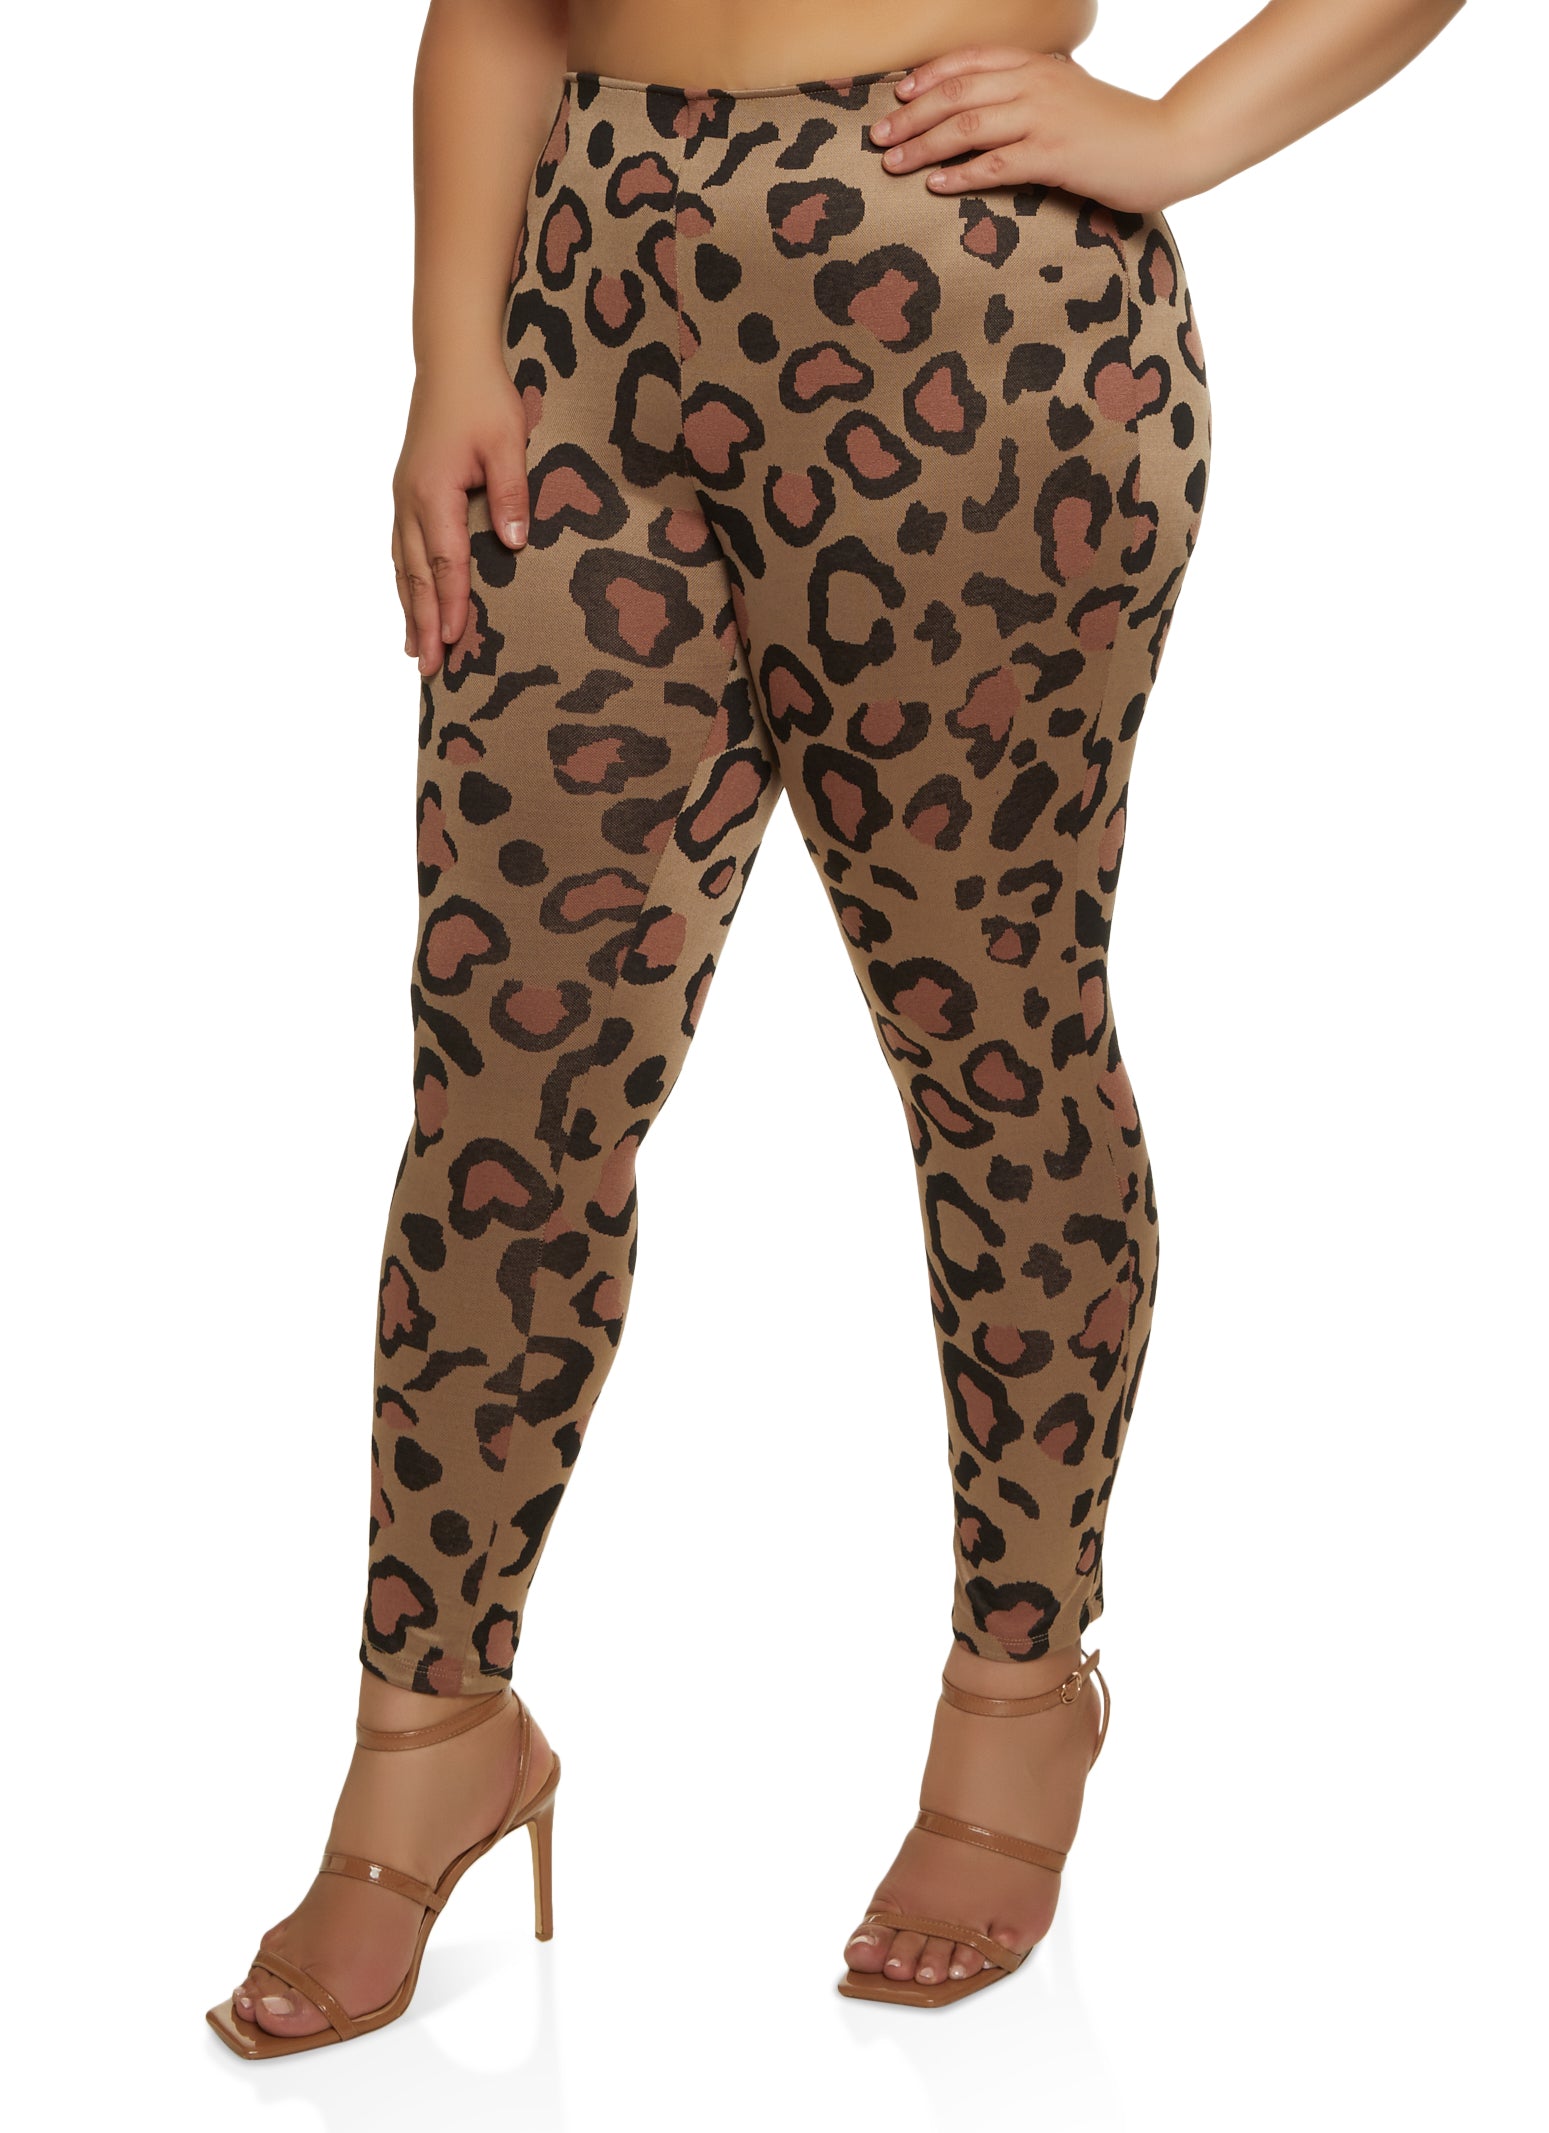 Rainbow leopard leggings with pockets - Plus